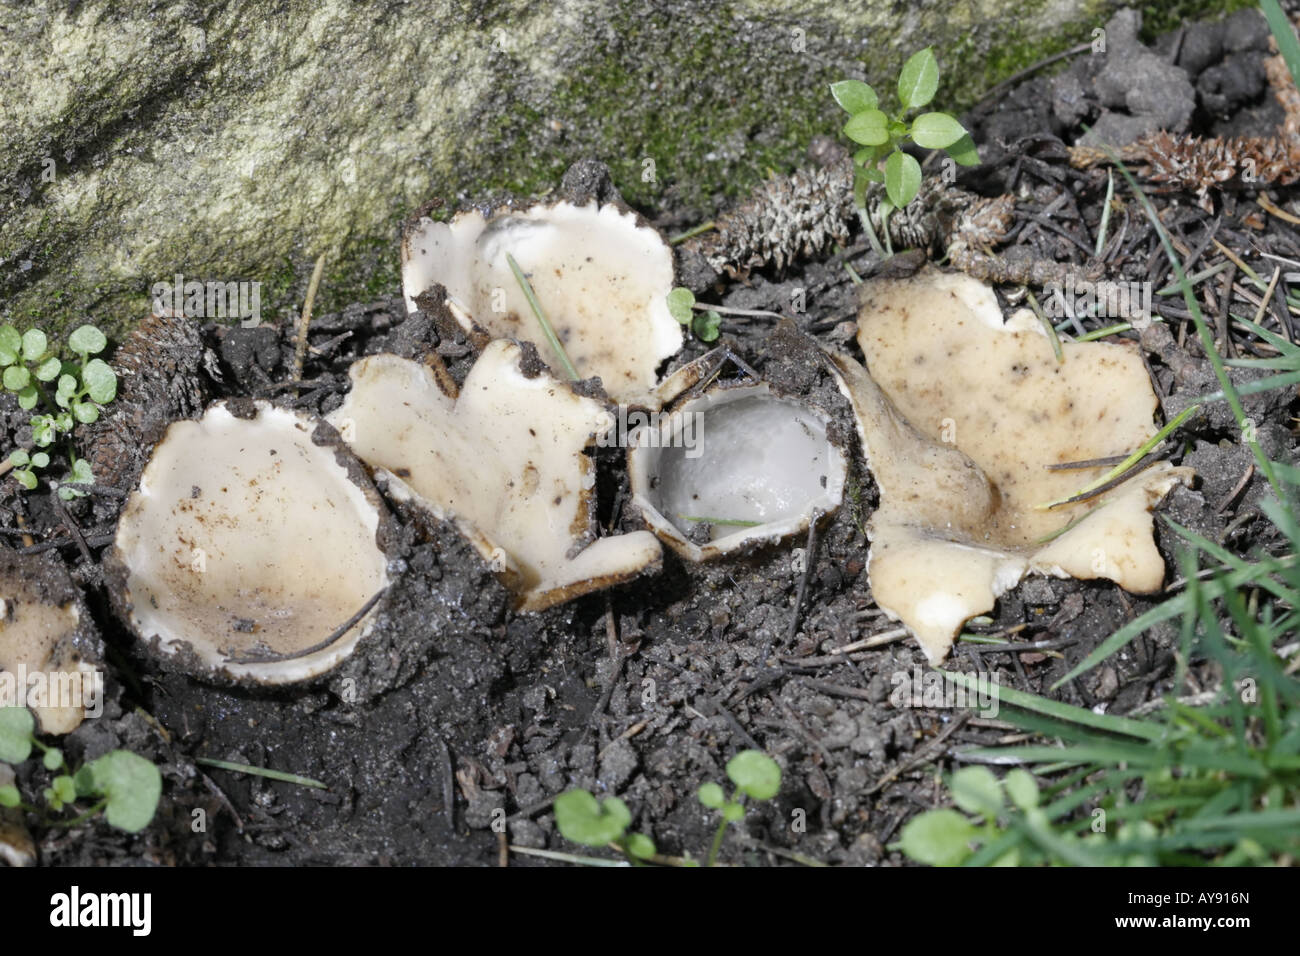 Group of Cedar Cup fungi, geopora sumneriana, growing alongside gravestone Stock Photo